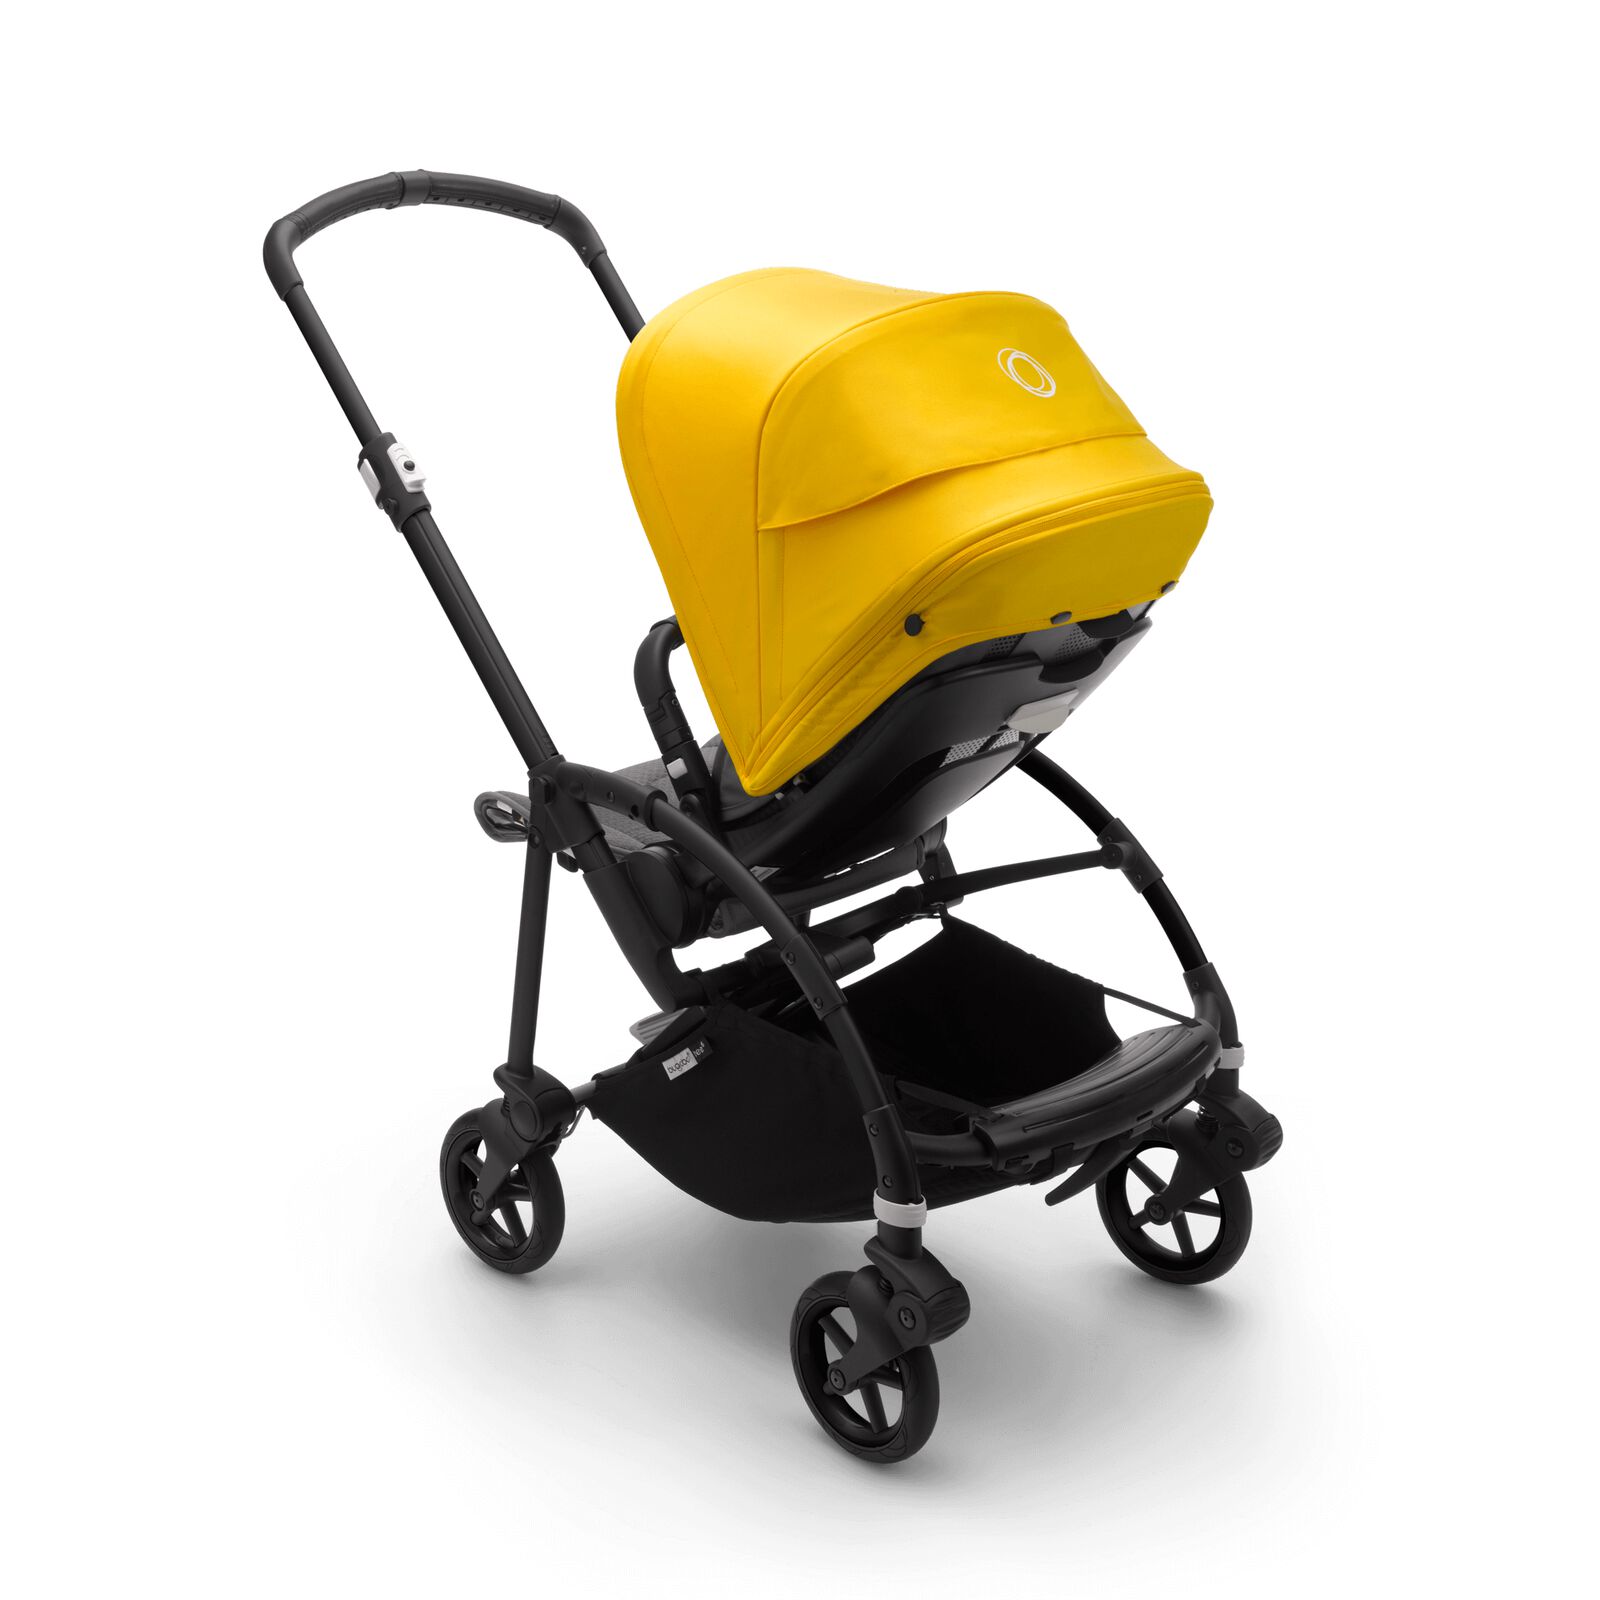 Bugaboo Bee 6 bassinet and seat stroller lemon yellow sun canopy, grey mélange fabrics, black base